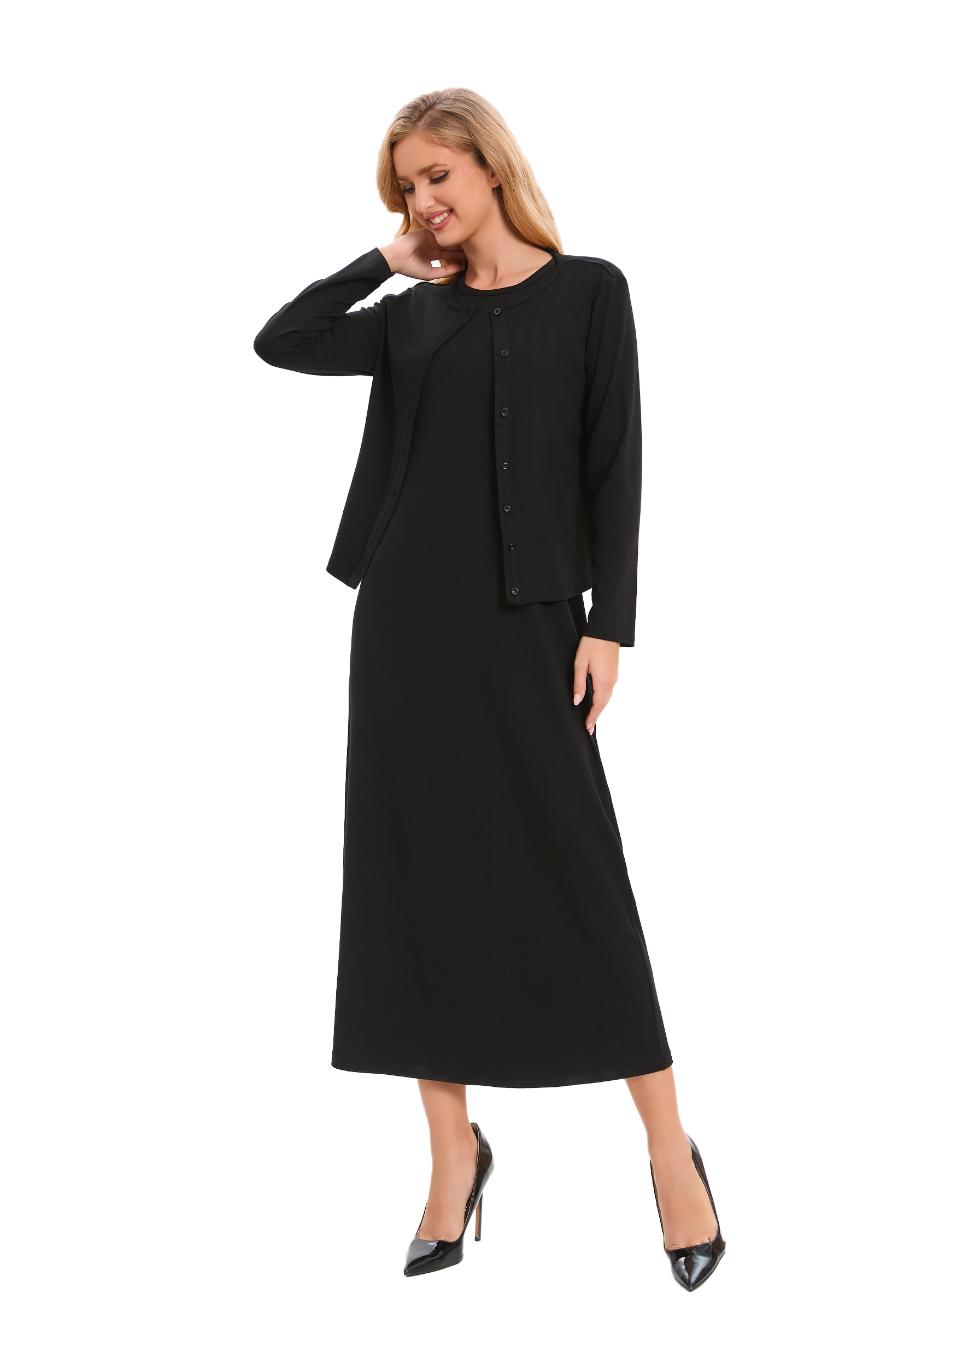 Black Sheath Dress & Cardigan Matching Outfit Set